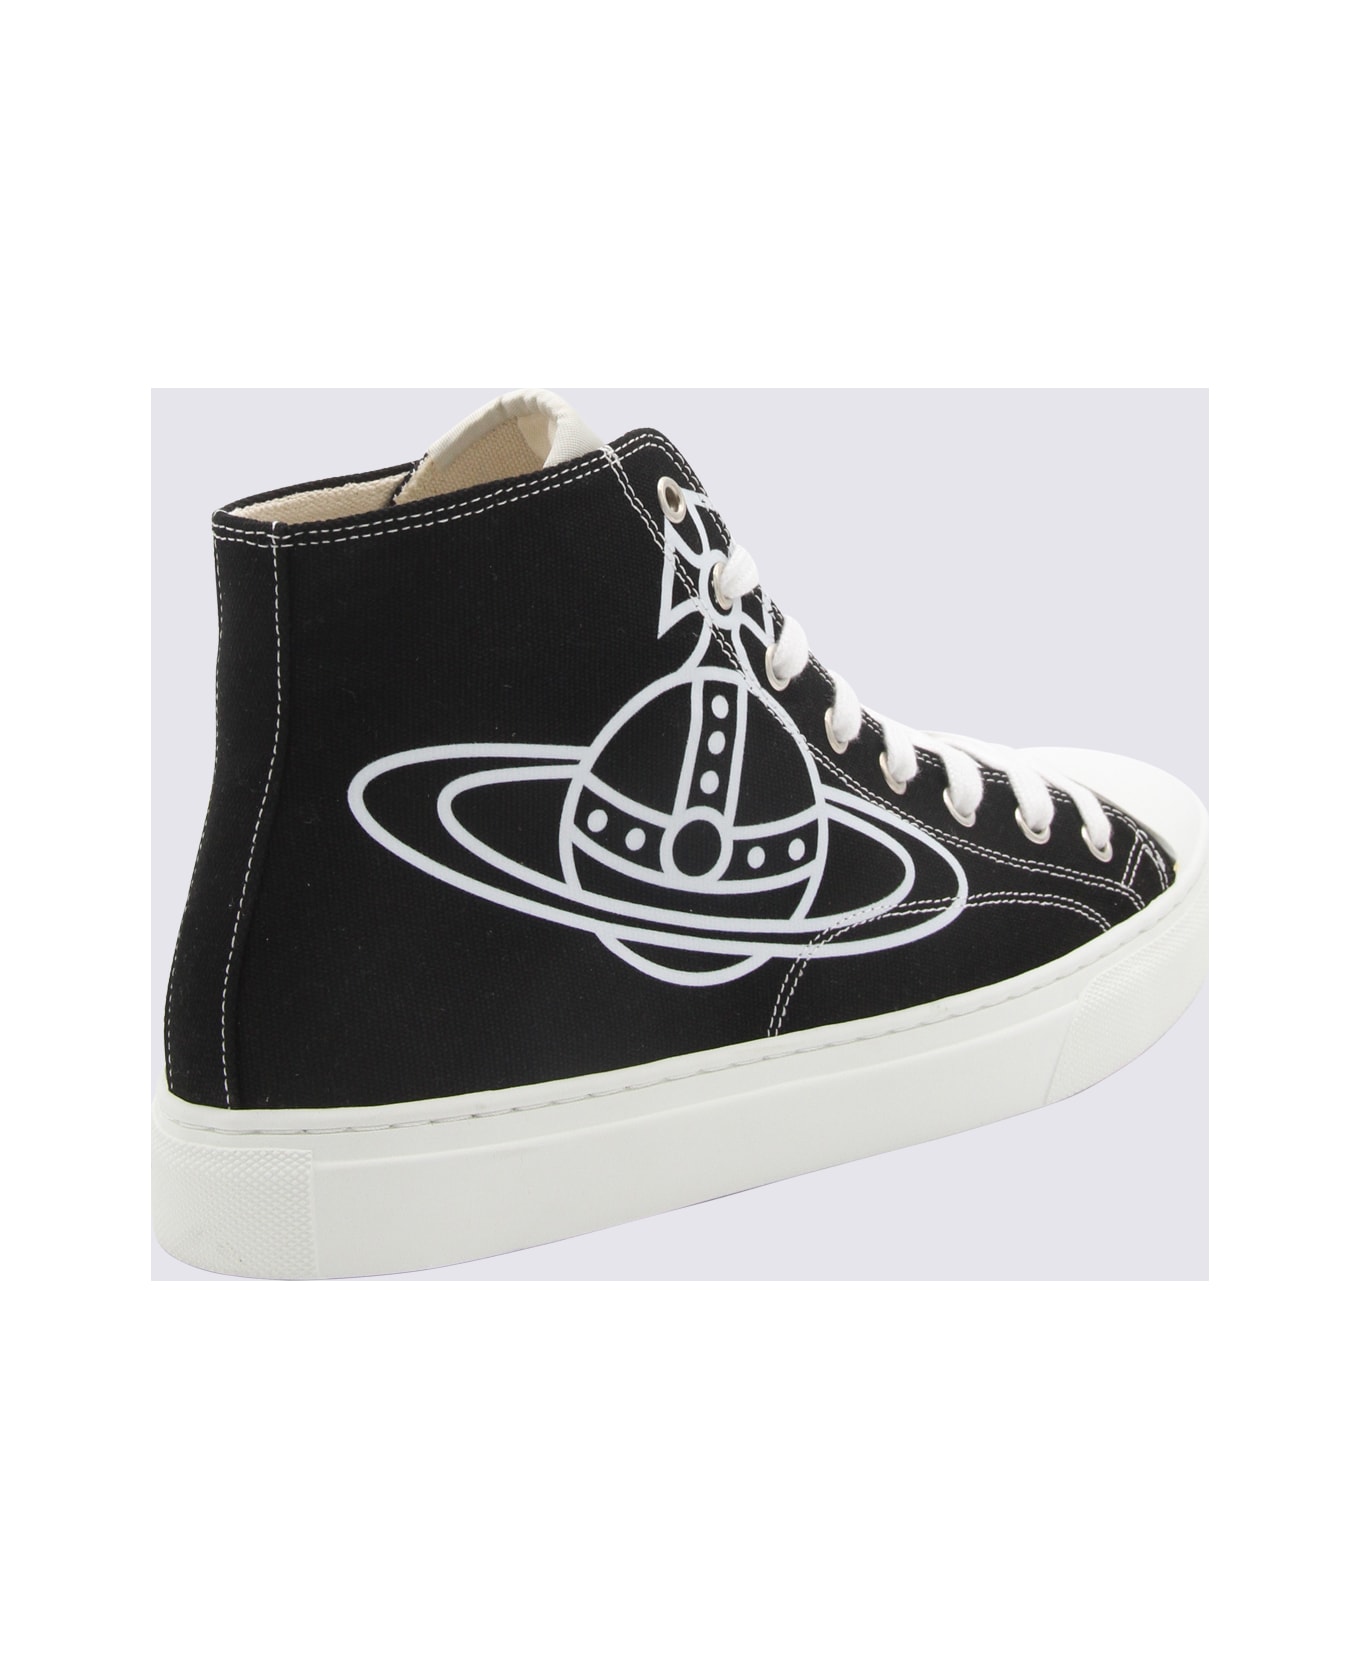 Vivienne Westwood Black And White Canvas Sneakers - Black スニーカー